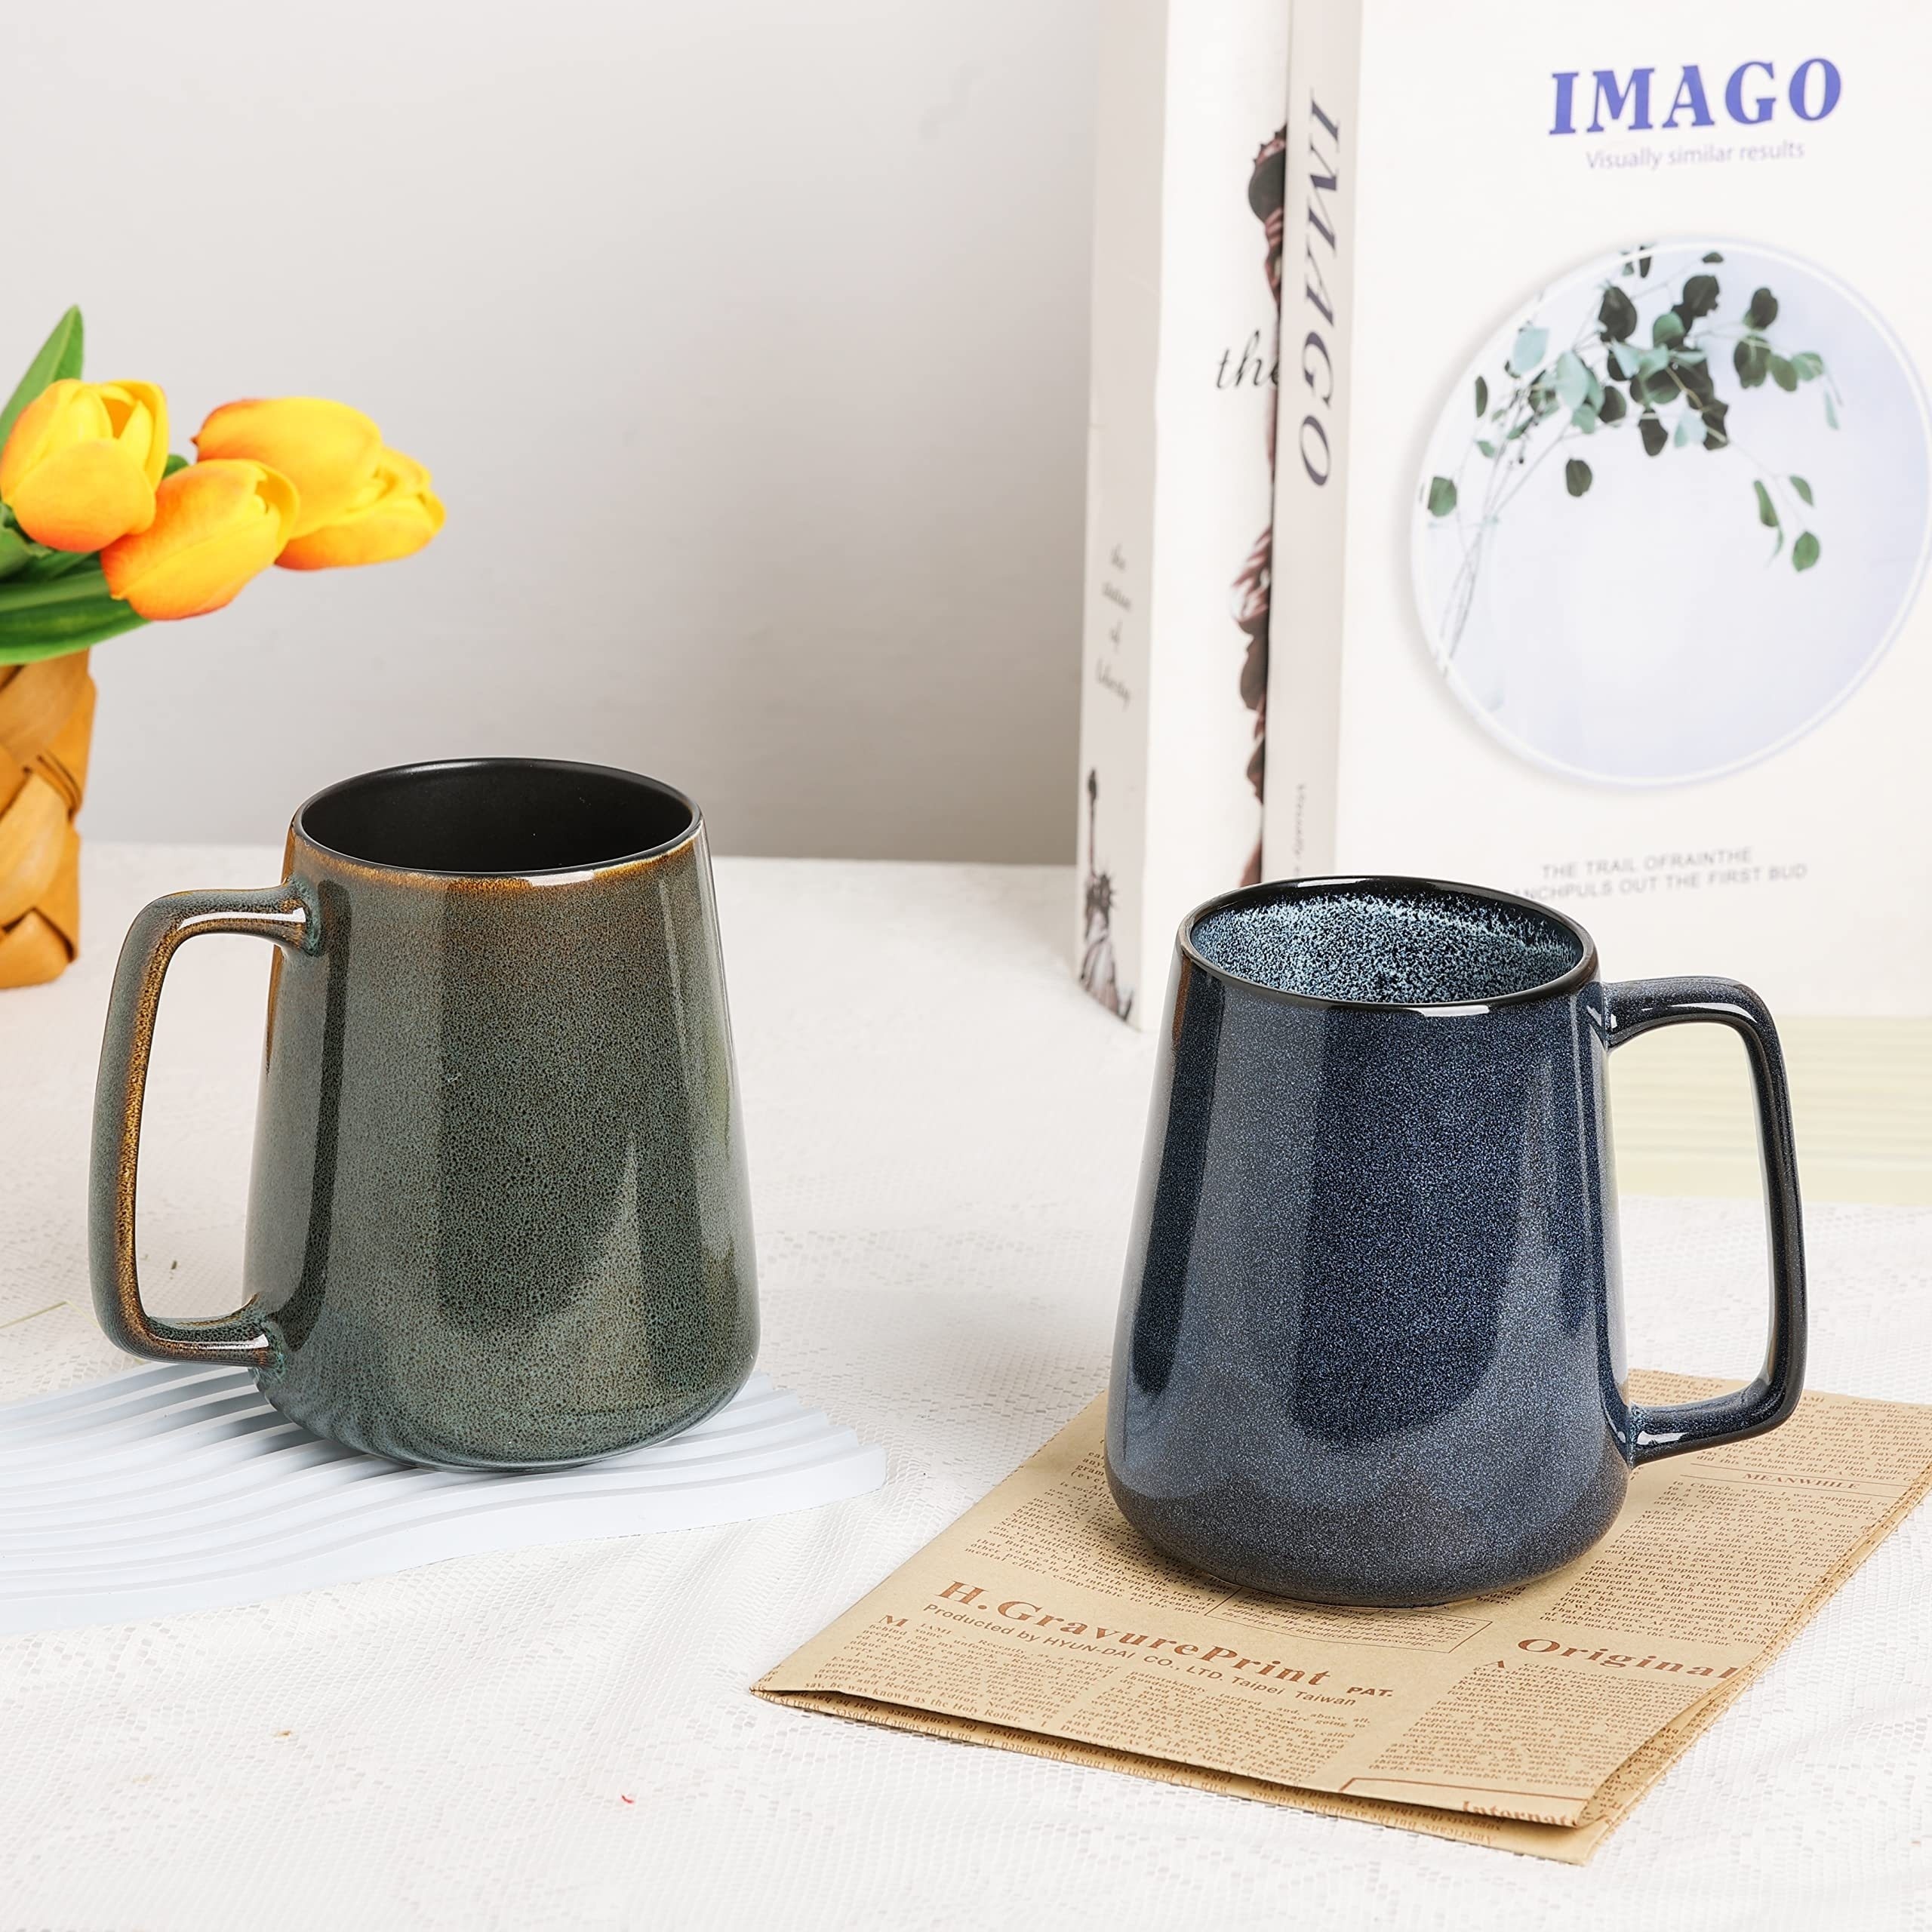 Sicaluya Extra Large Oatmeal Porcelain Mug with Handle - 24 OZ Wide Coffee  Mug, Microwave and Dishwa…See more Sicaluya Extra Large Oatmeal Porcelain